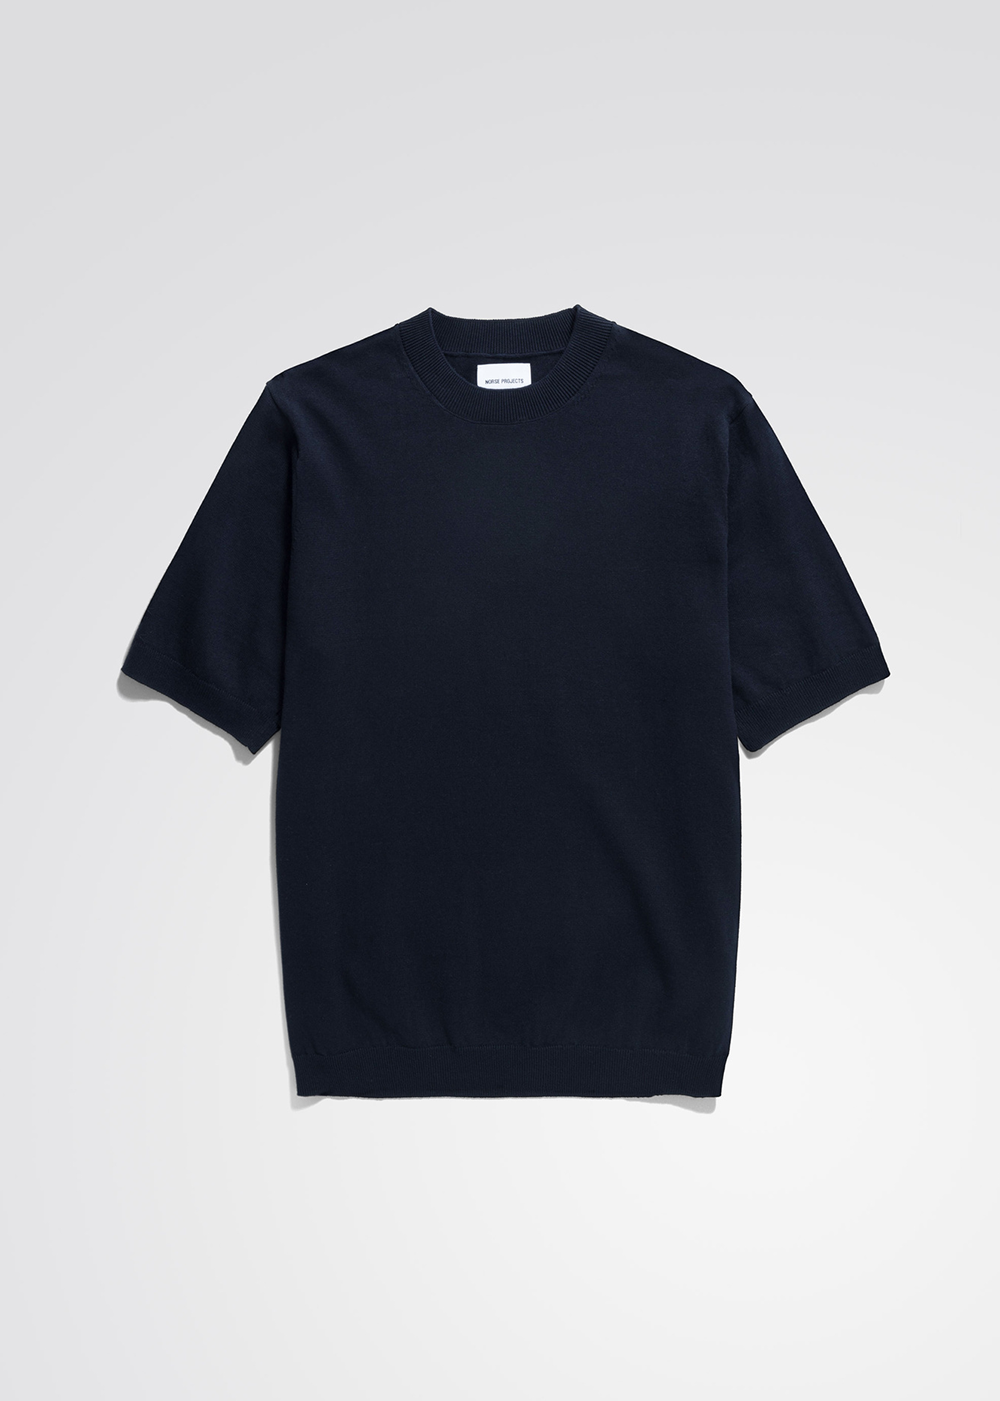 Rhys Cotton Linen T-Shirt - Dark Navy - Norse Projects Canada - Danali